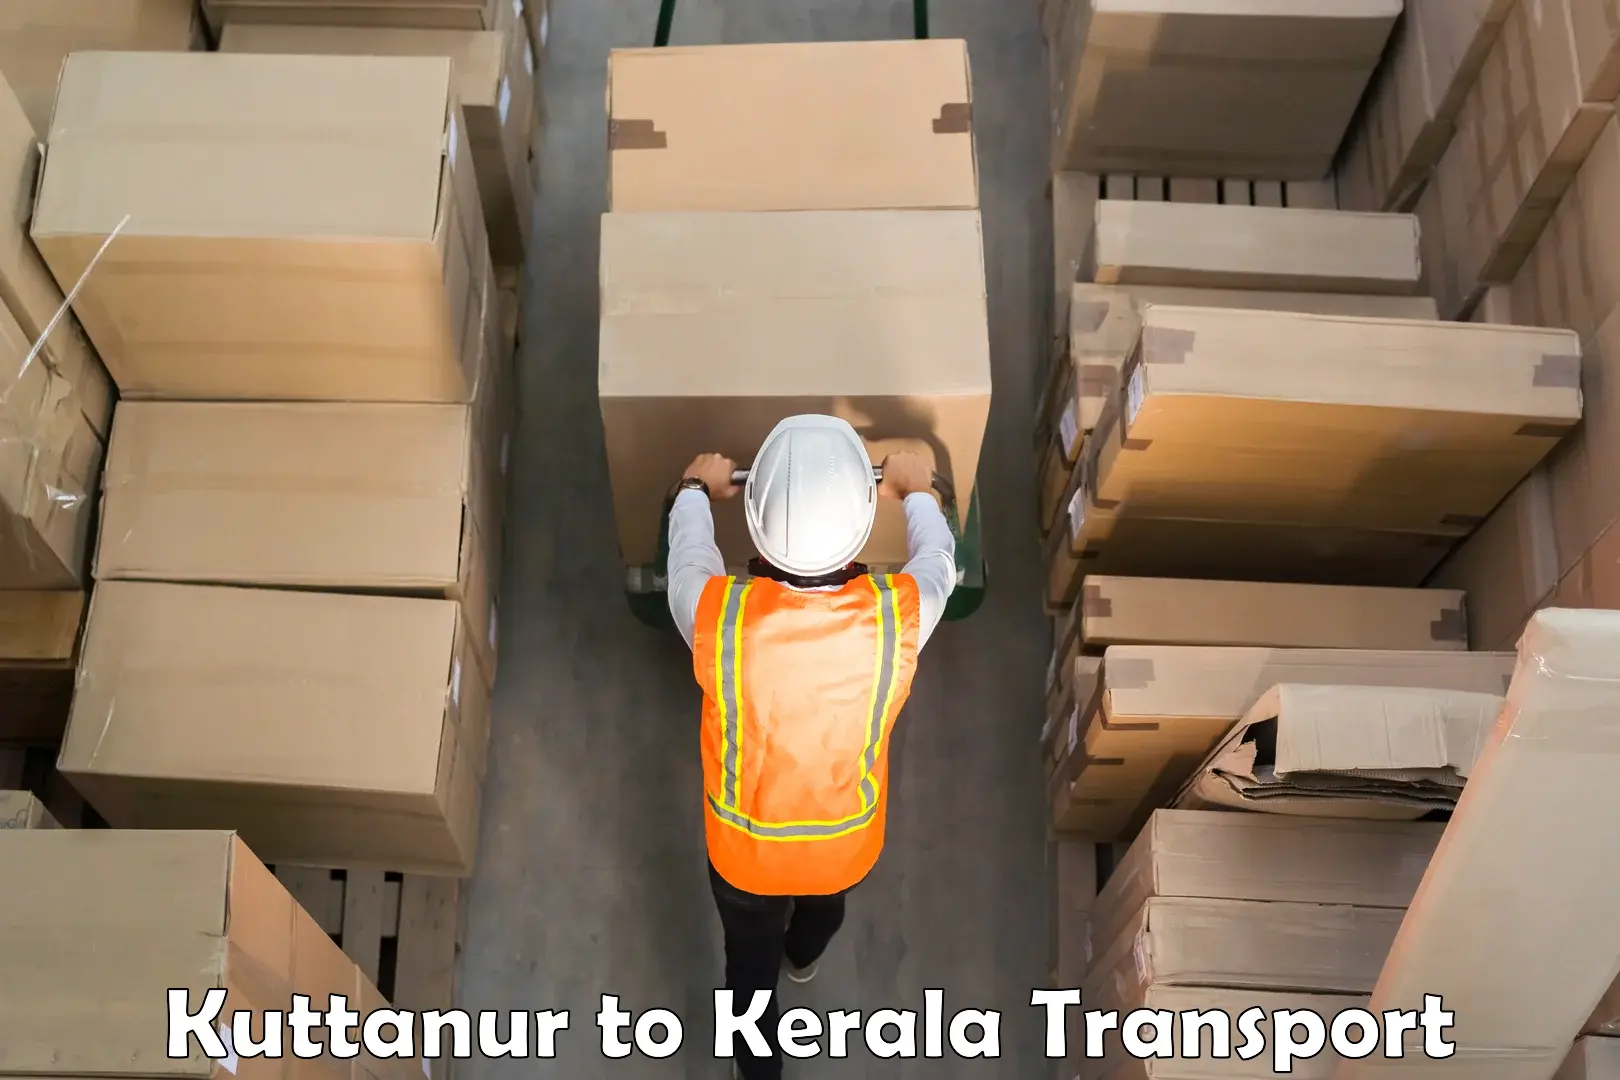 Shipping partner Kuttanur to Koothattukulam